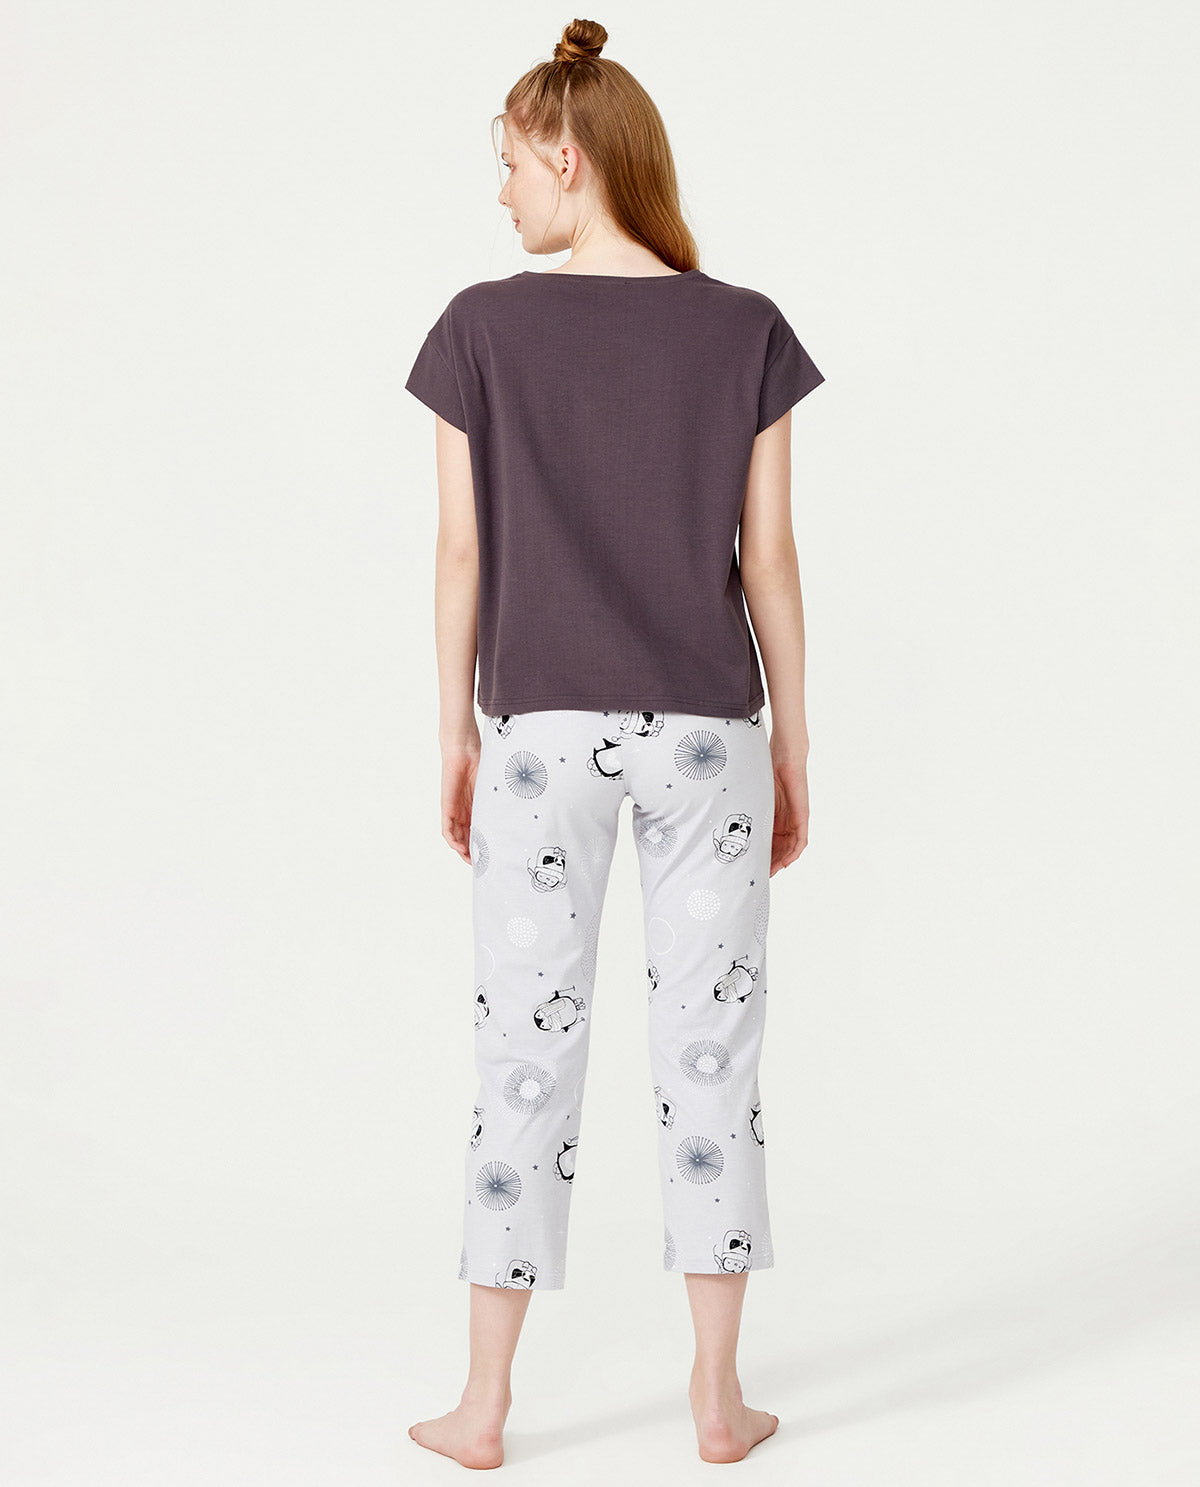 Short Sleeve Penguin Printed Cotton Pyjama Set - Grey - Ocoza